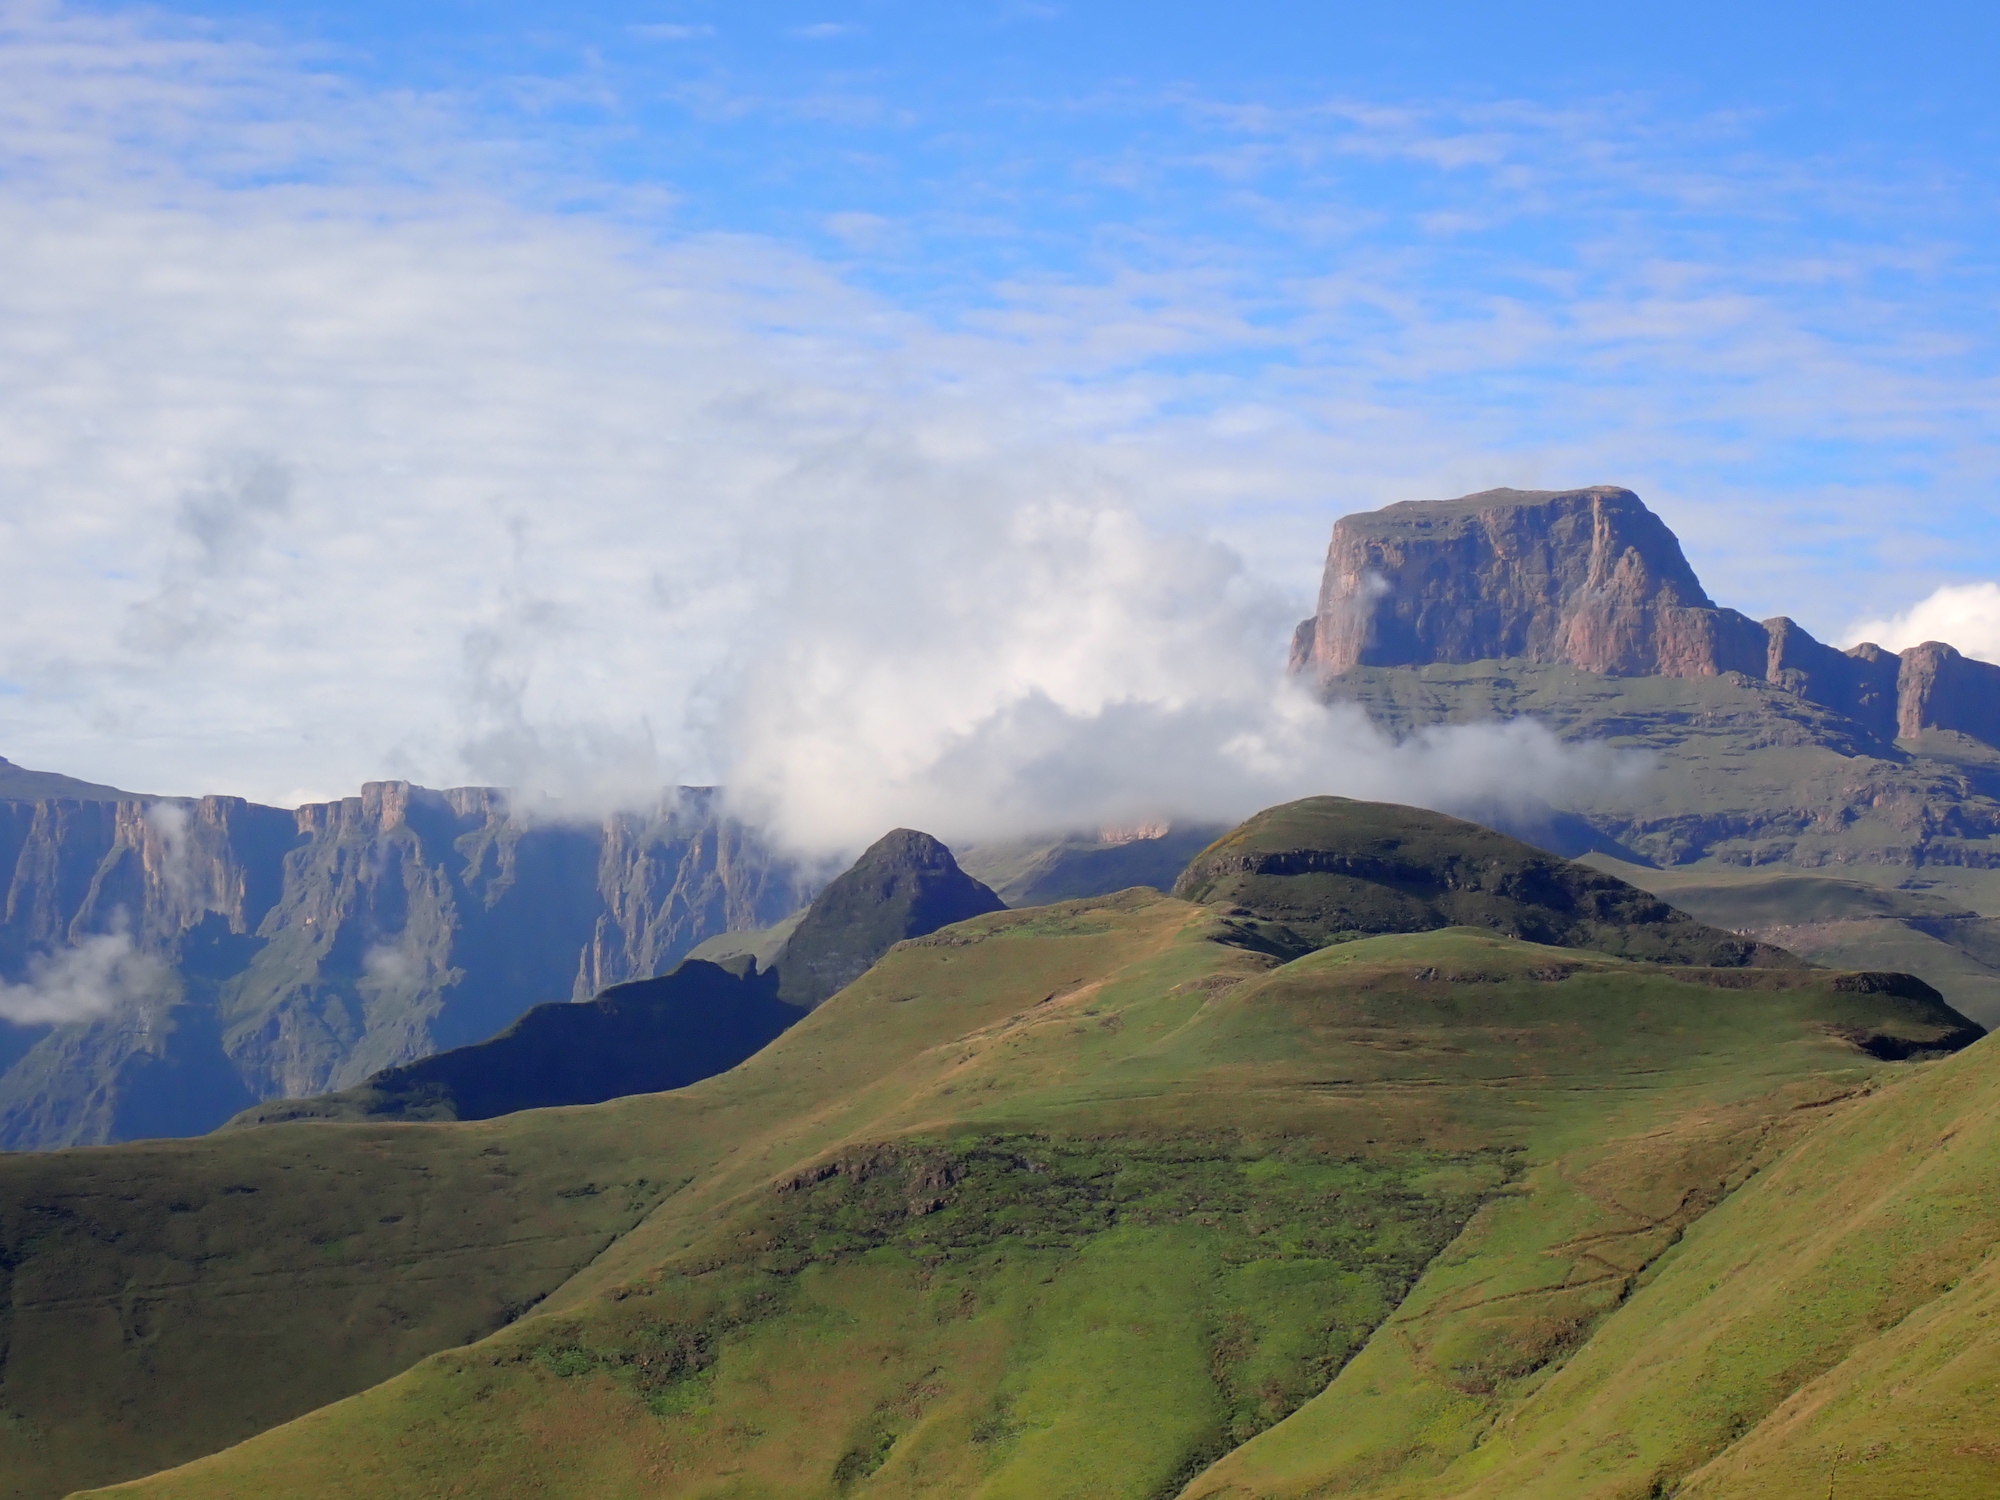 South Africa - Drakensberg | RangeX field site